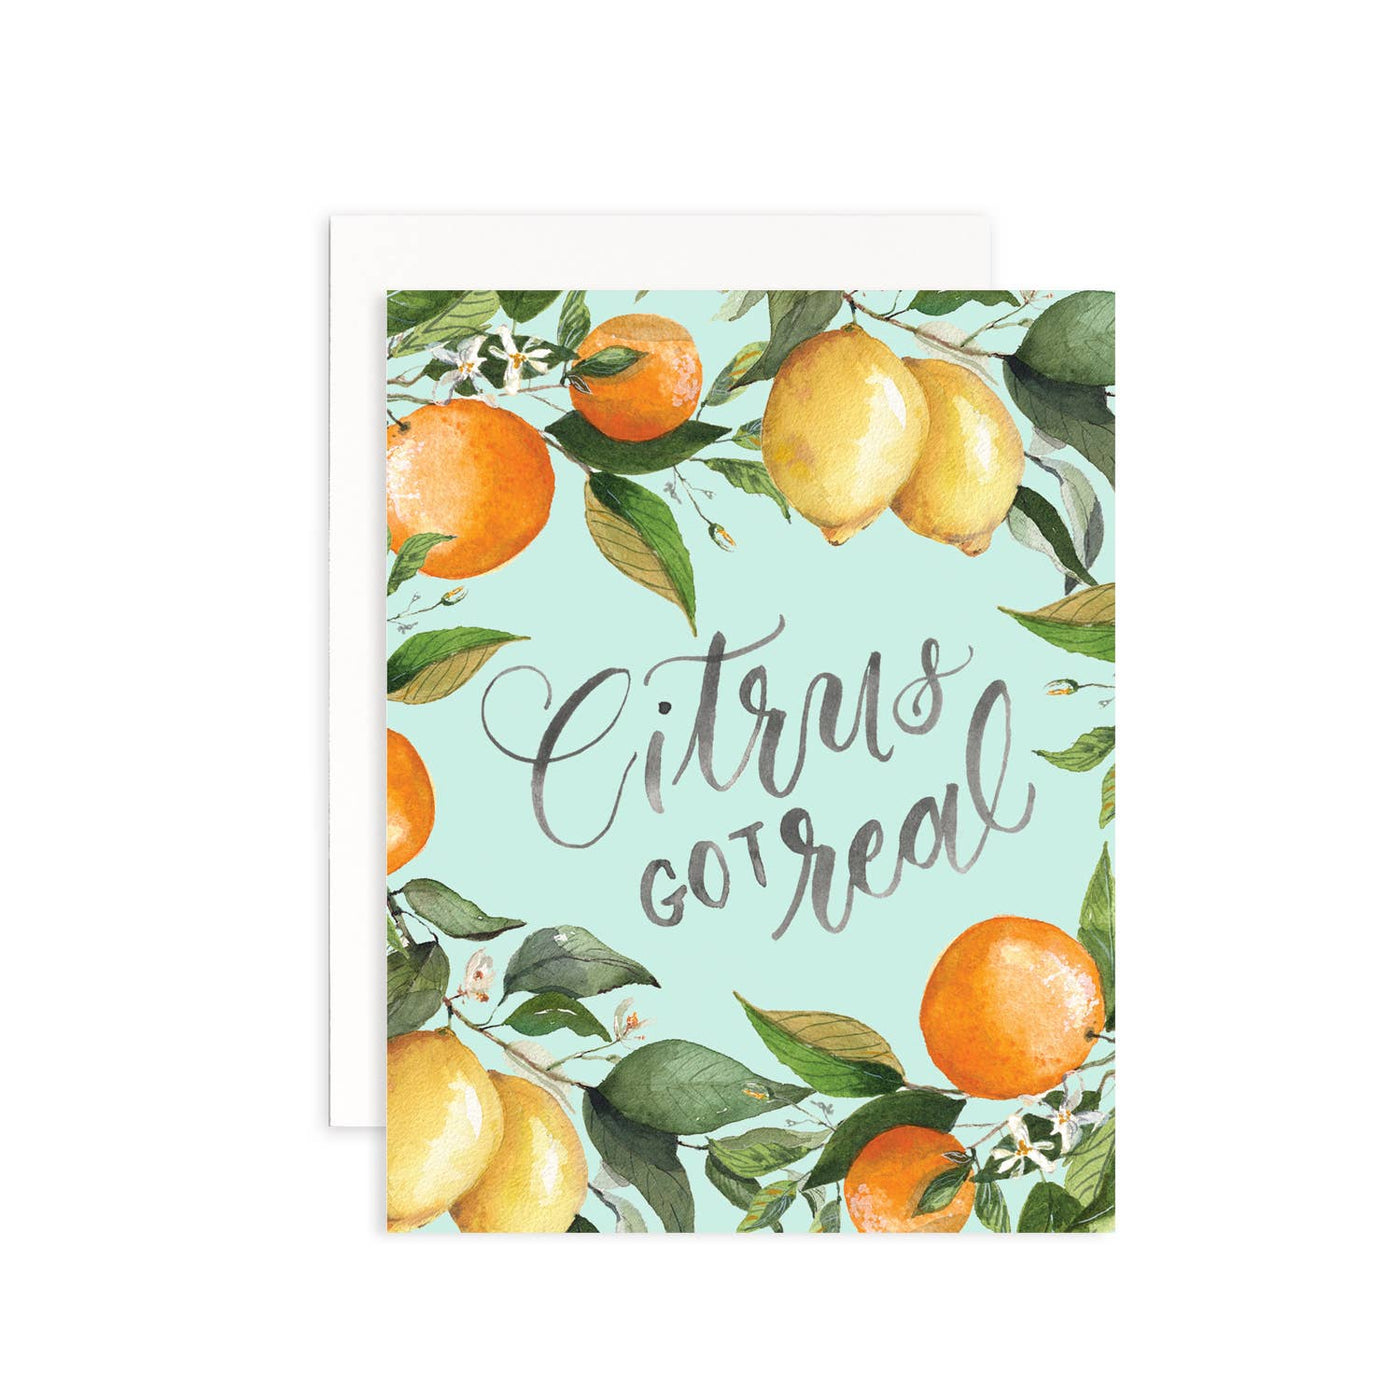 Citrus Got Real Greeting Card